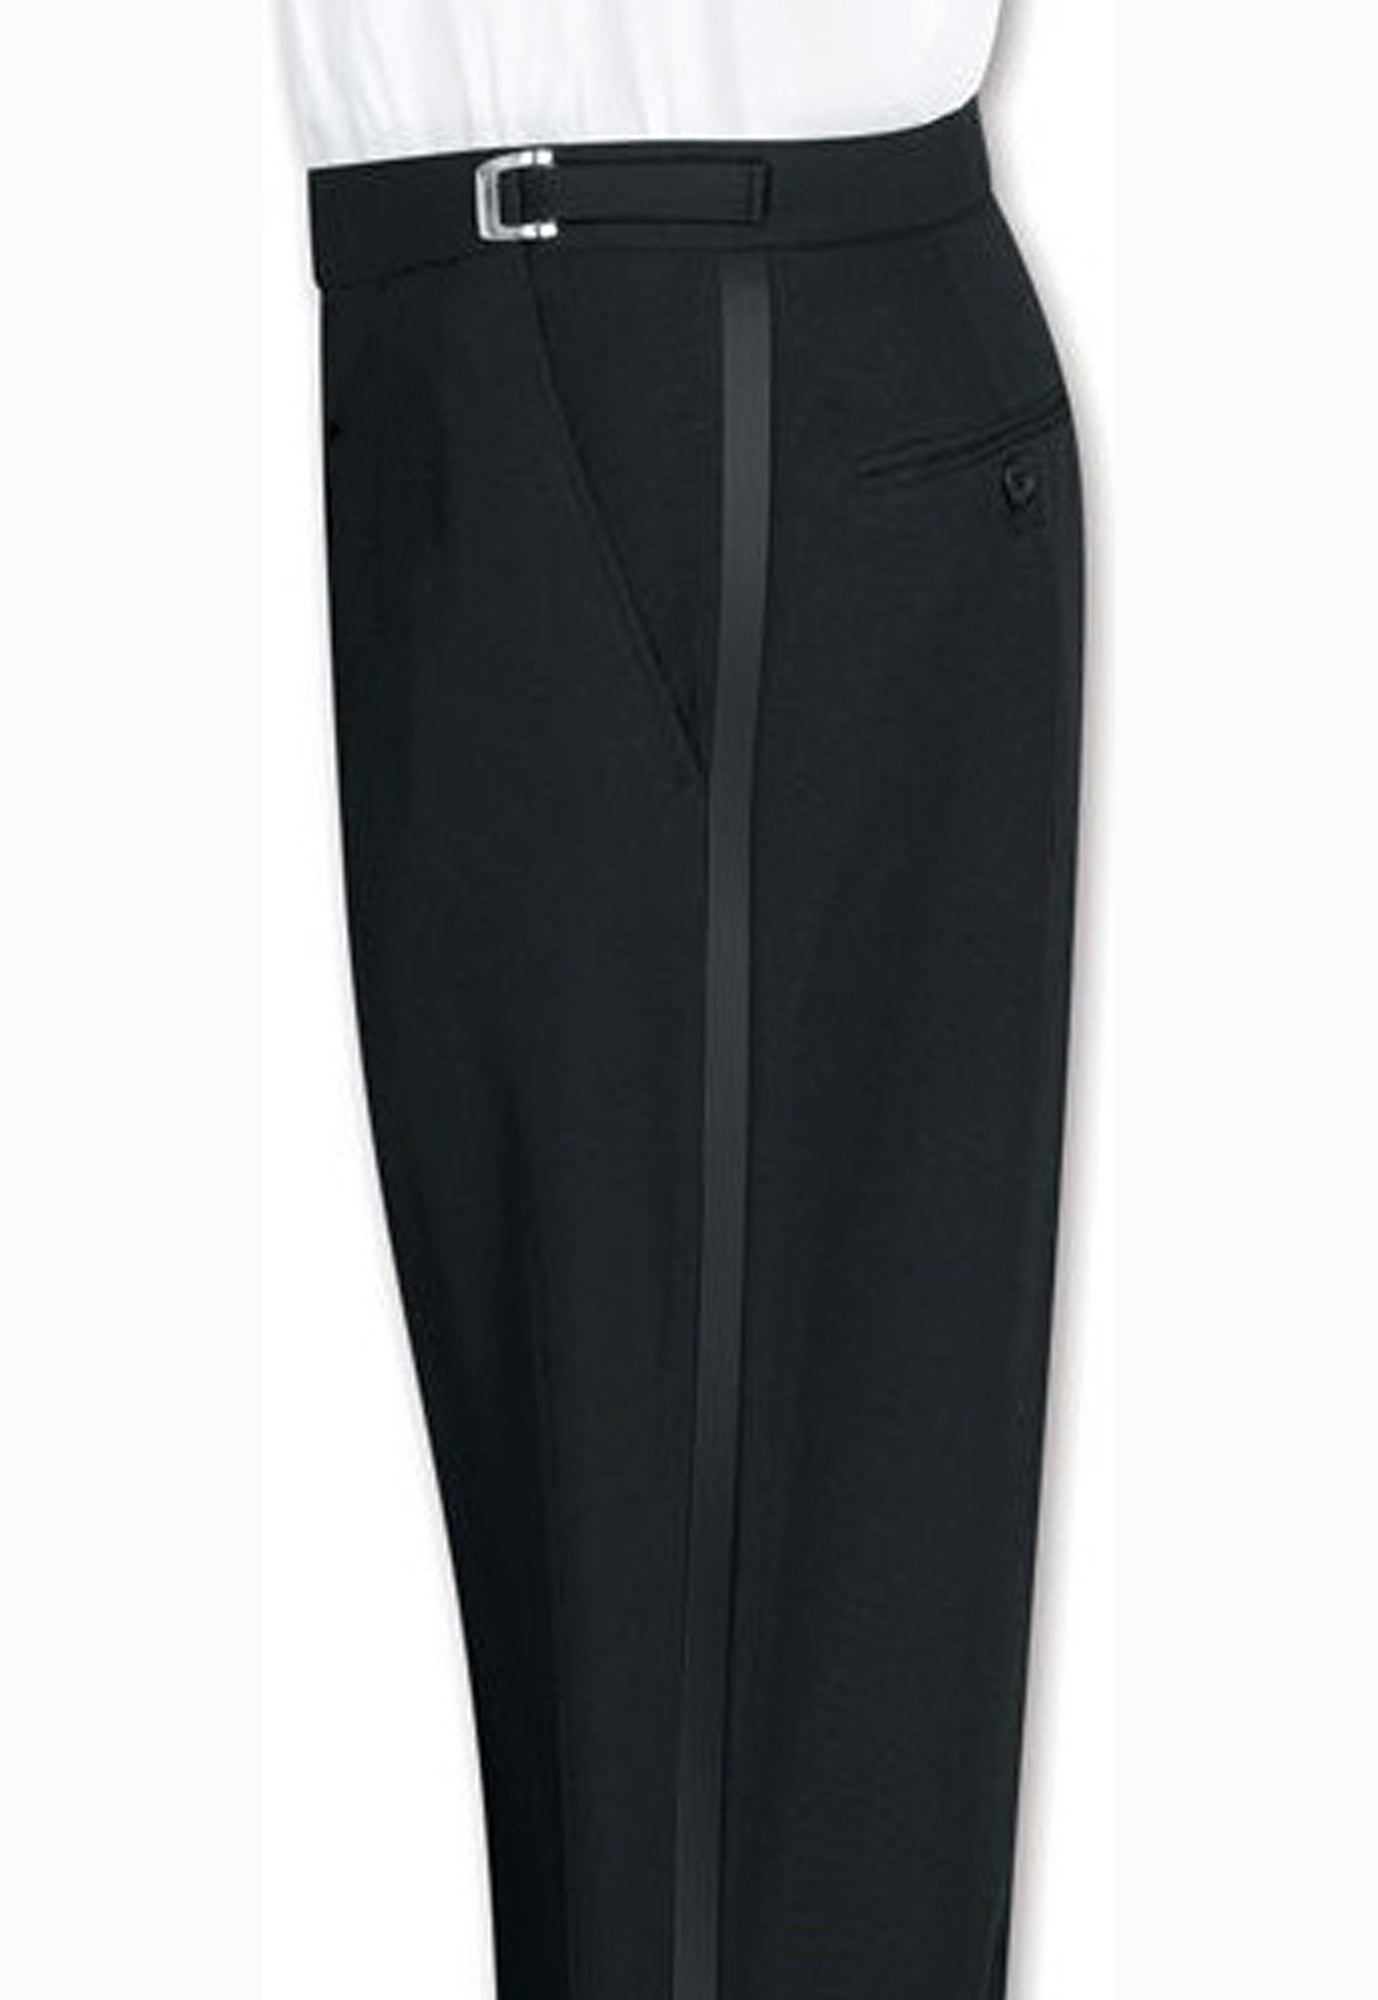 Hot Topic Adjustable Waist Casual Pants for Women | Mercari